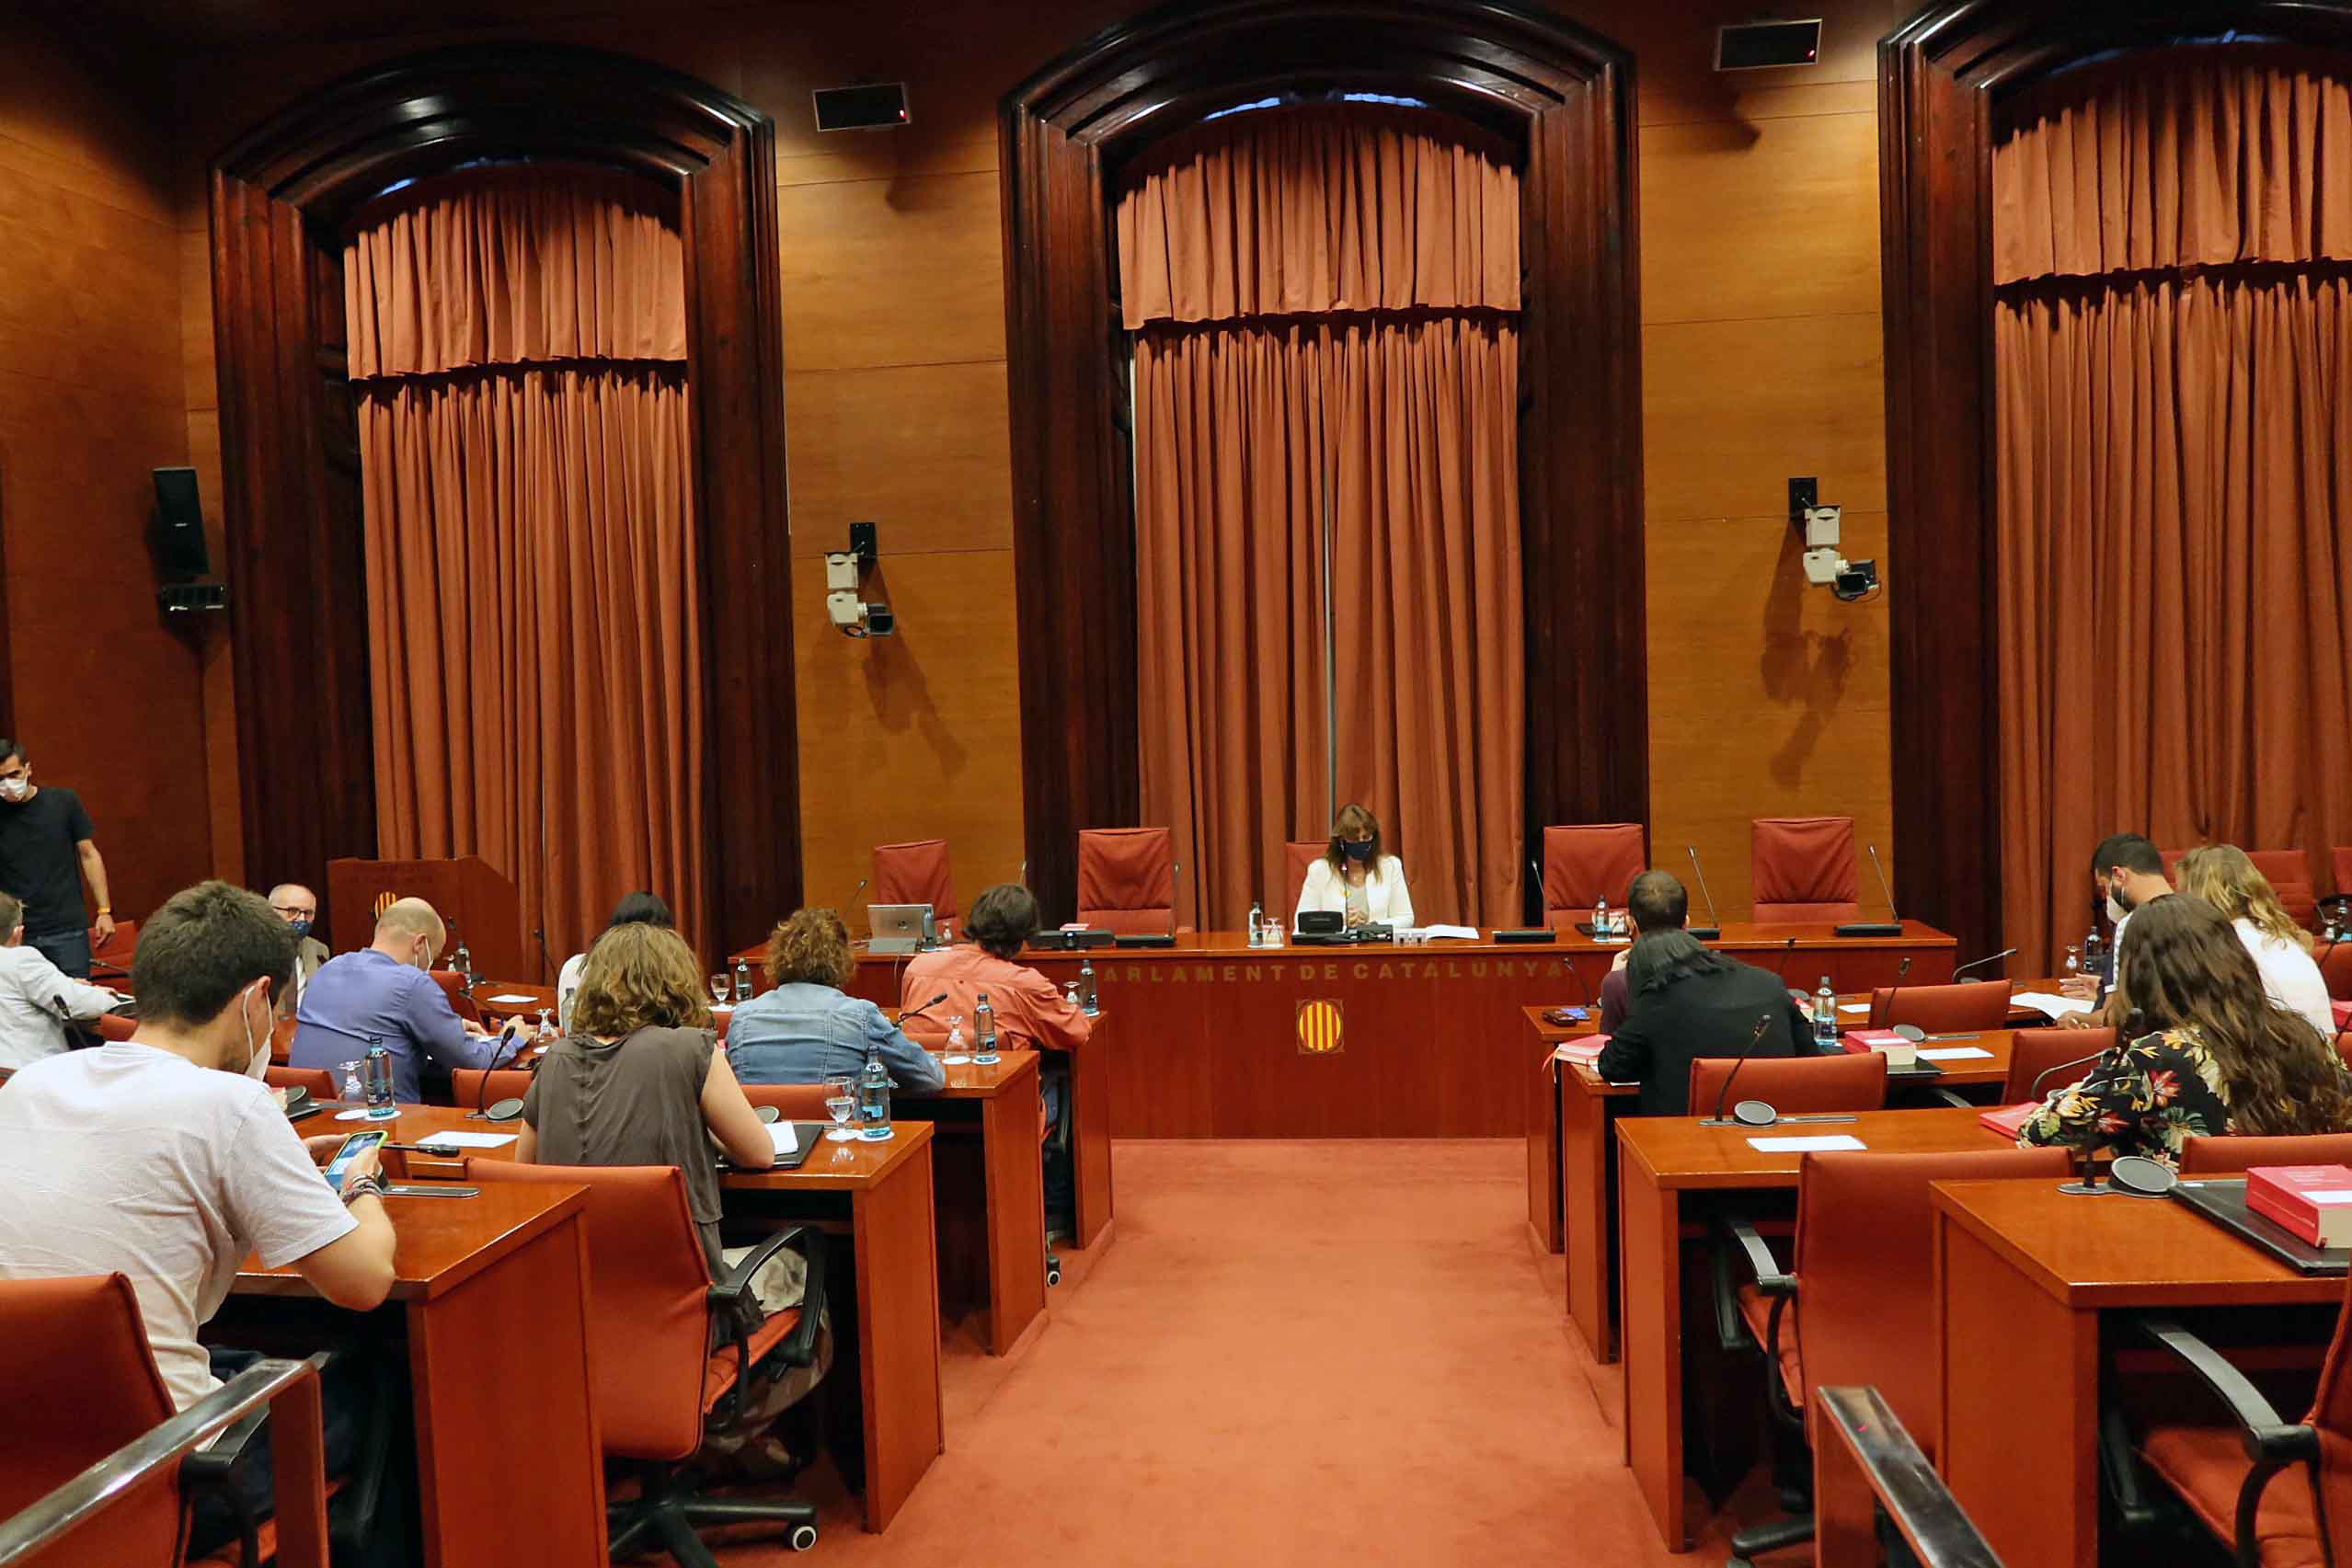 Los miembros del PSC en la Mesa del Parlament esquivan el pacto contra Vox